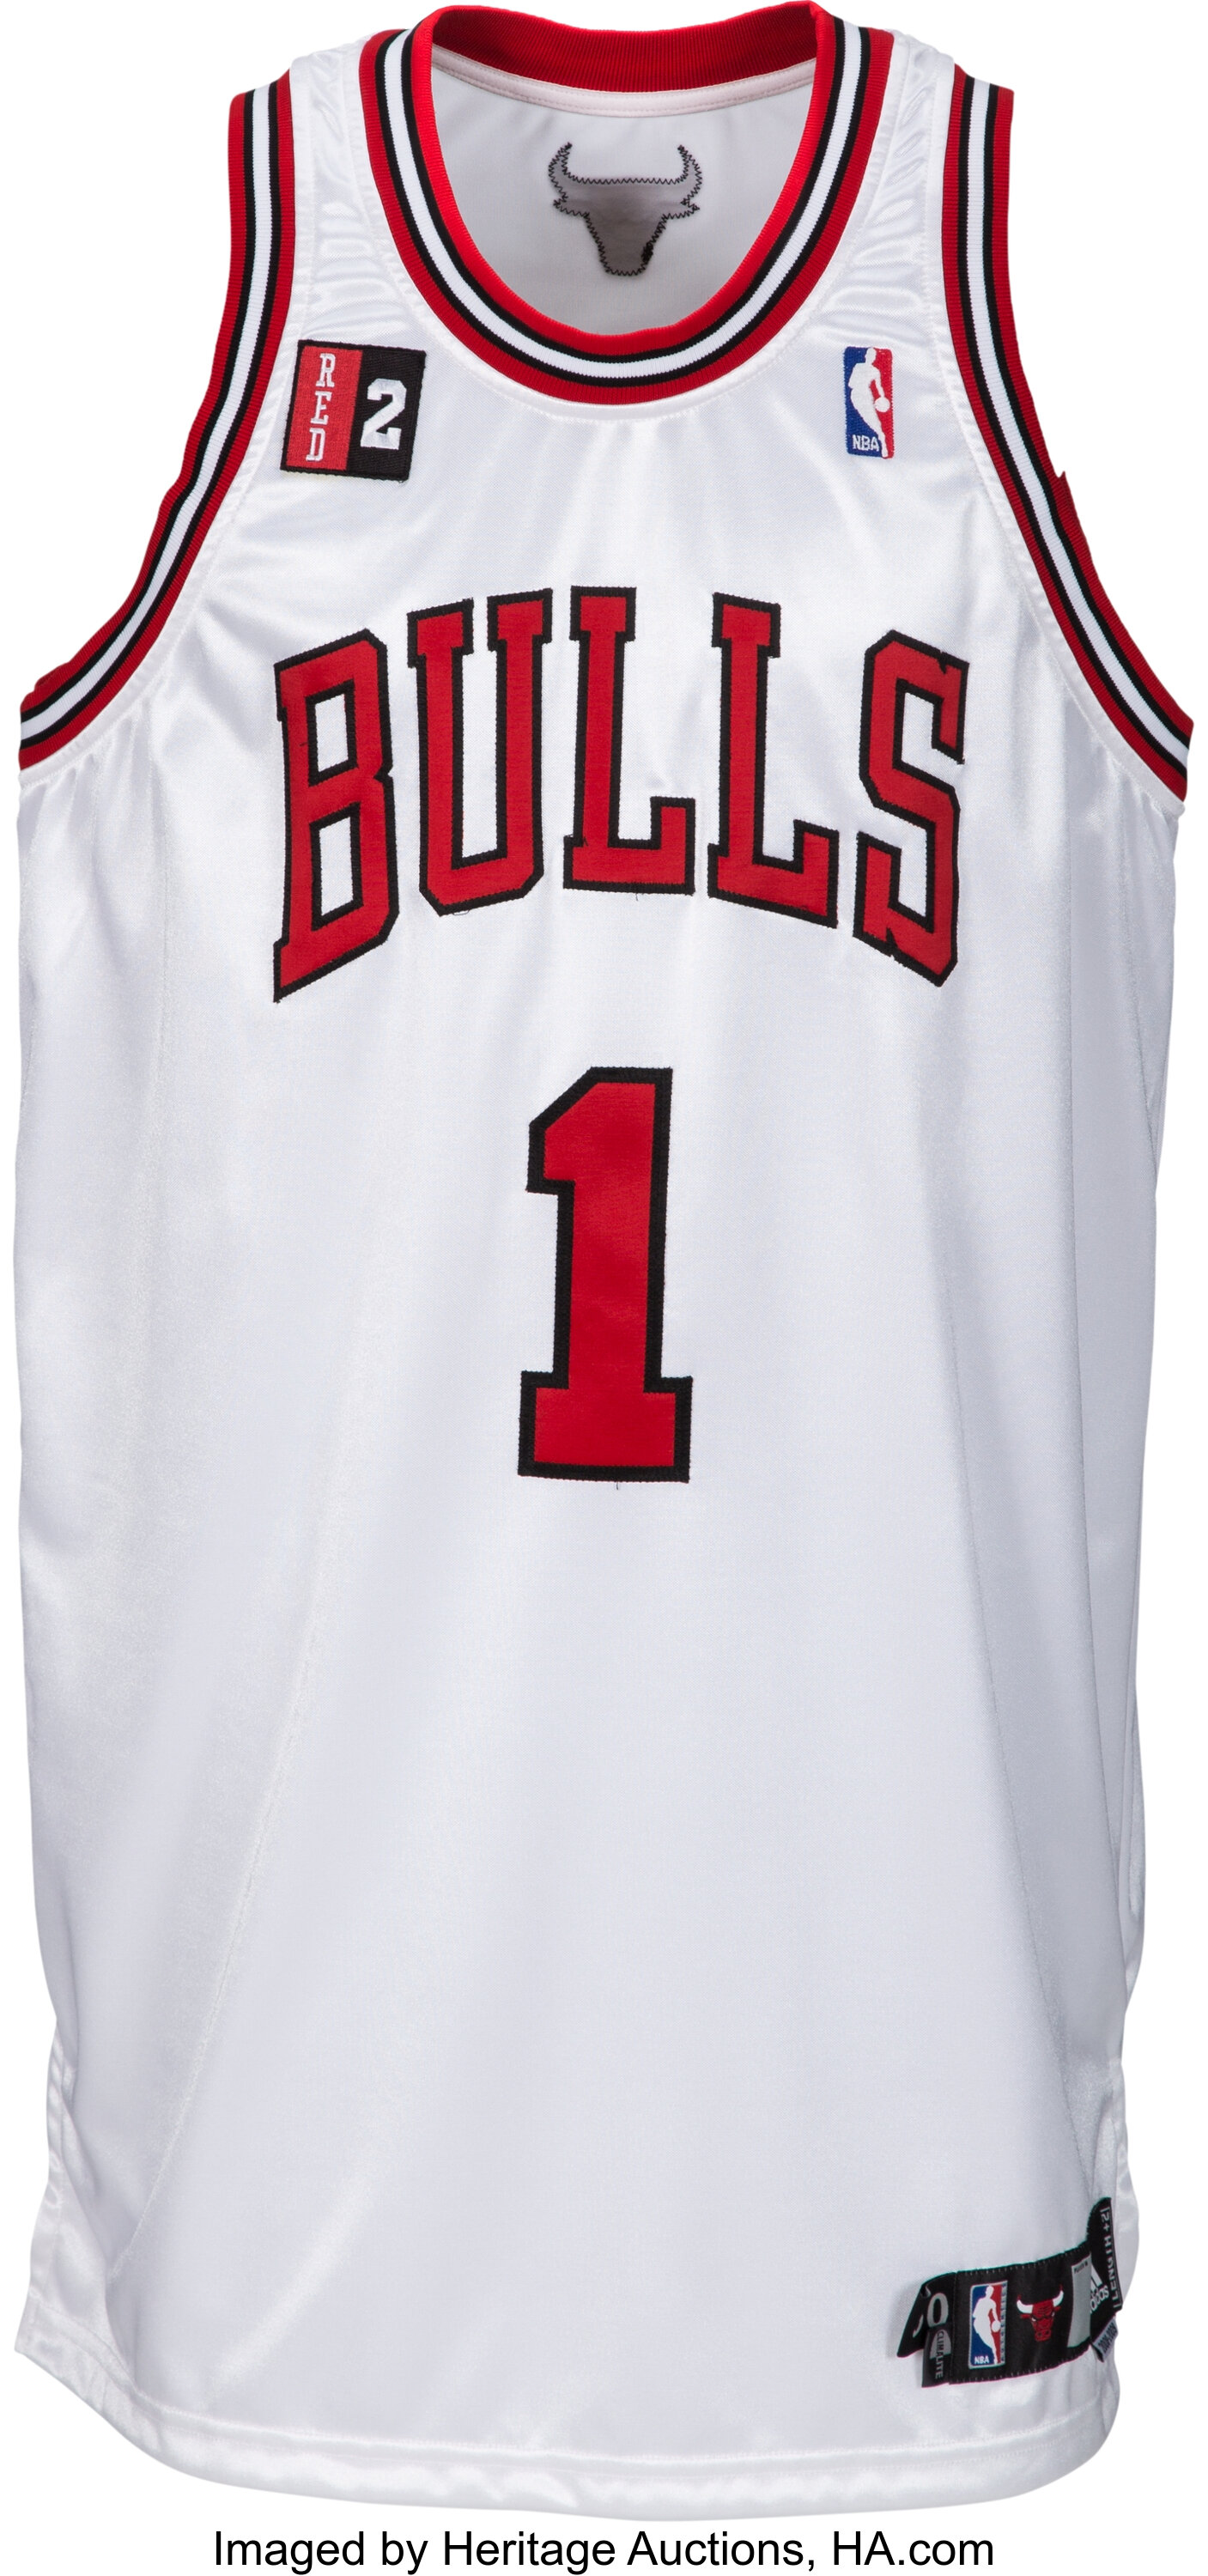 NIKE DERRICK ROSE Chicago Bulls Jersey Size XXL $39.00 - PicClick